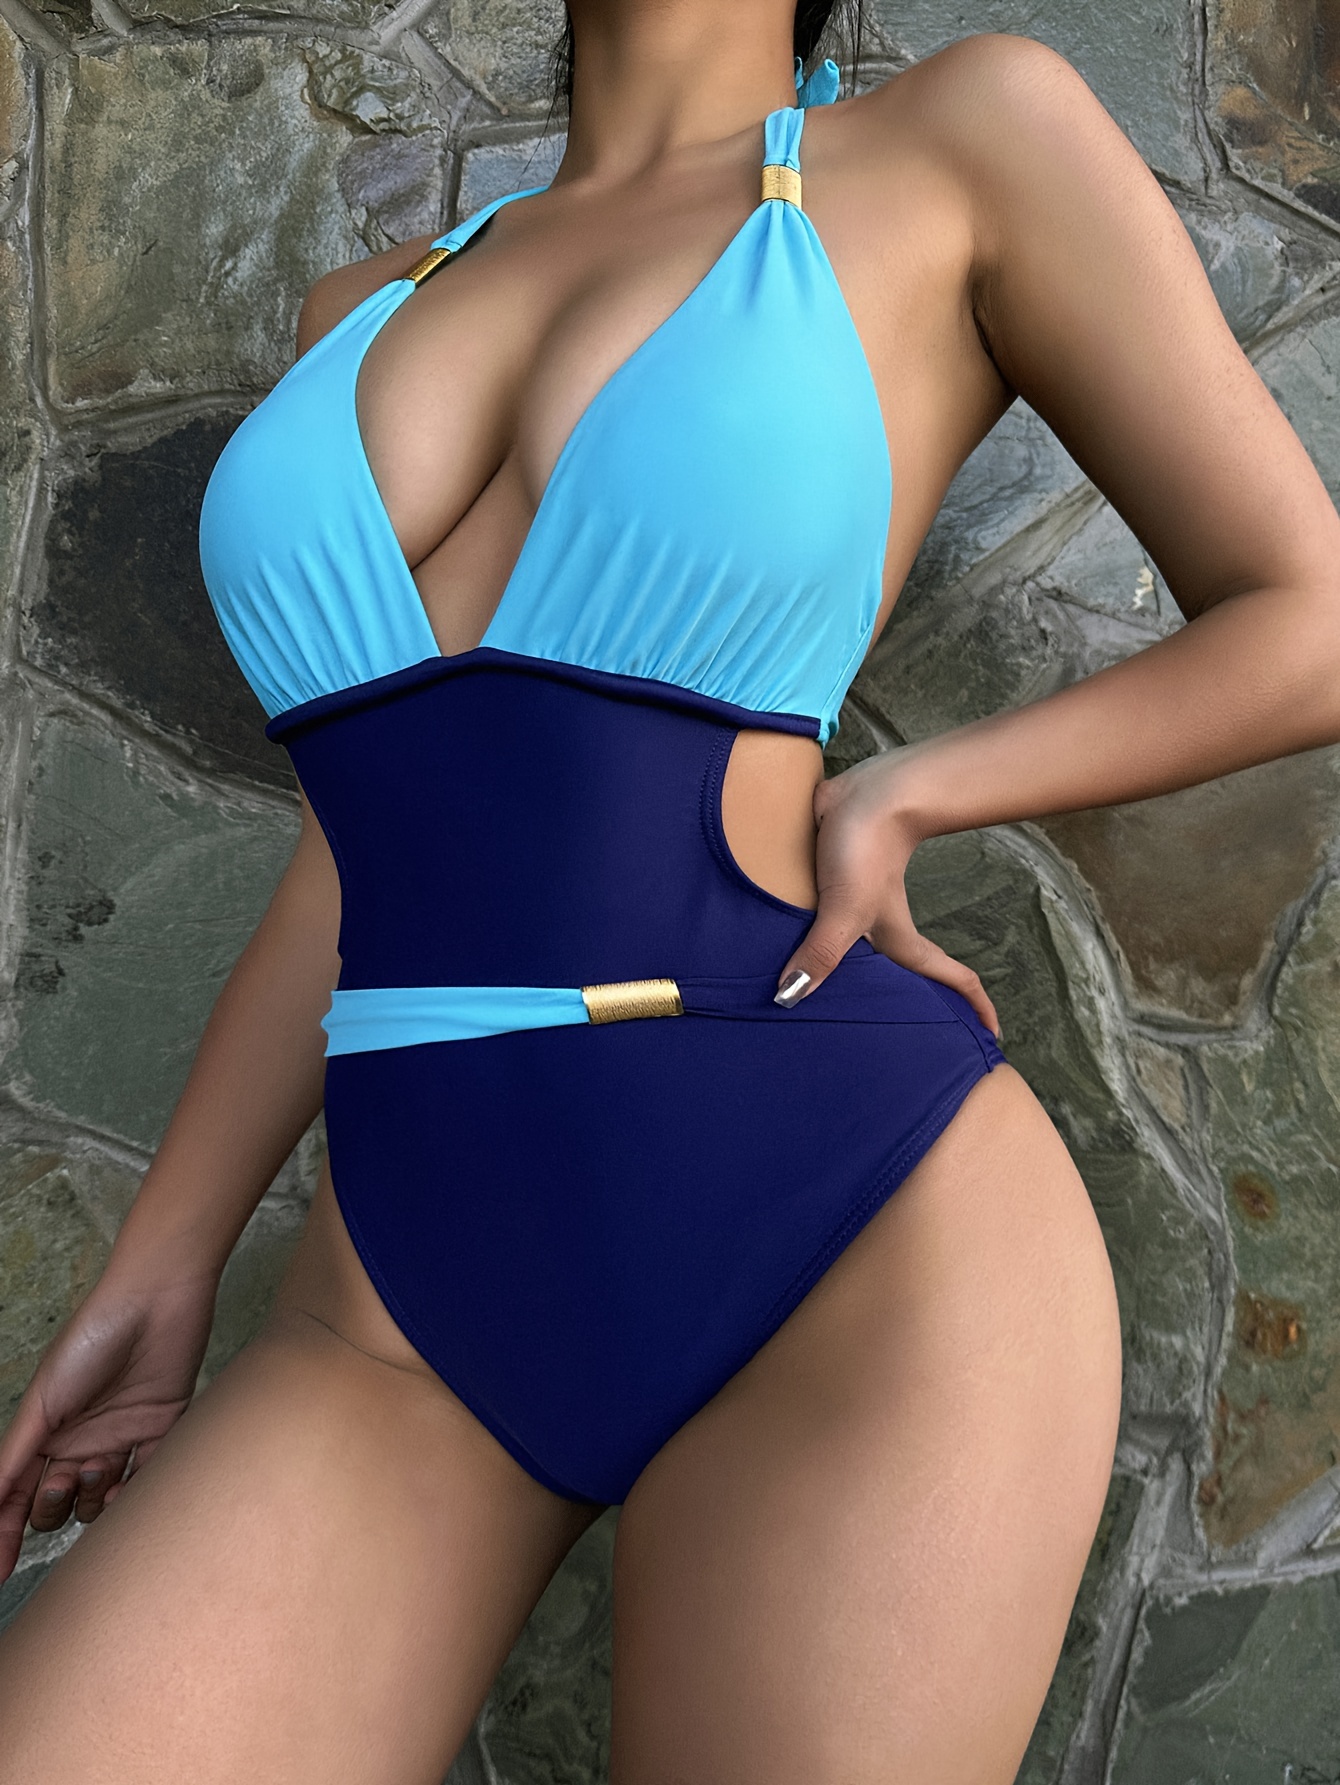 Halter Print Women One Piece Swimsuit Swimwear Female Bathing Suits  Bodysuit Beach Wear Backless (Color : MJC313202, Size : Medium) :  : Fashion